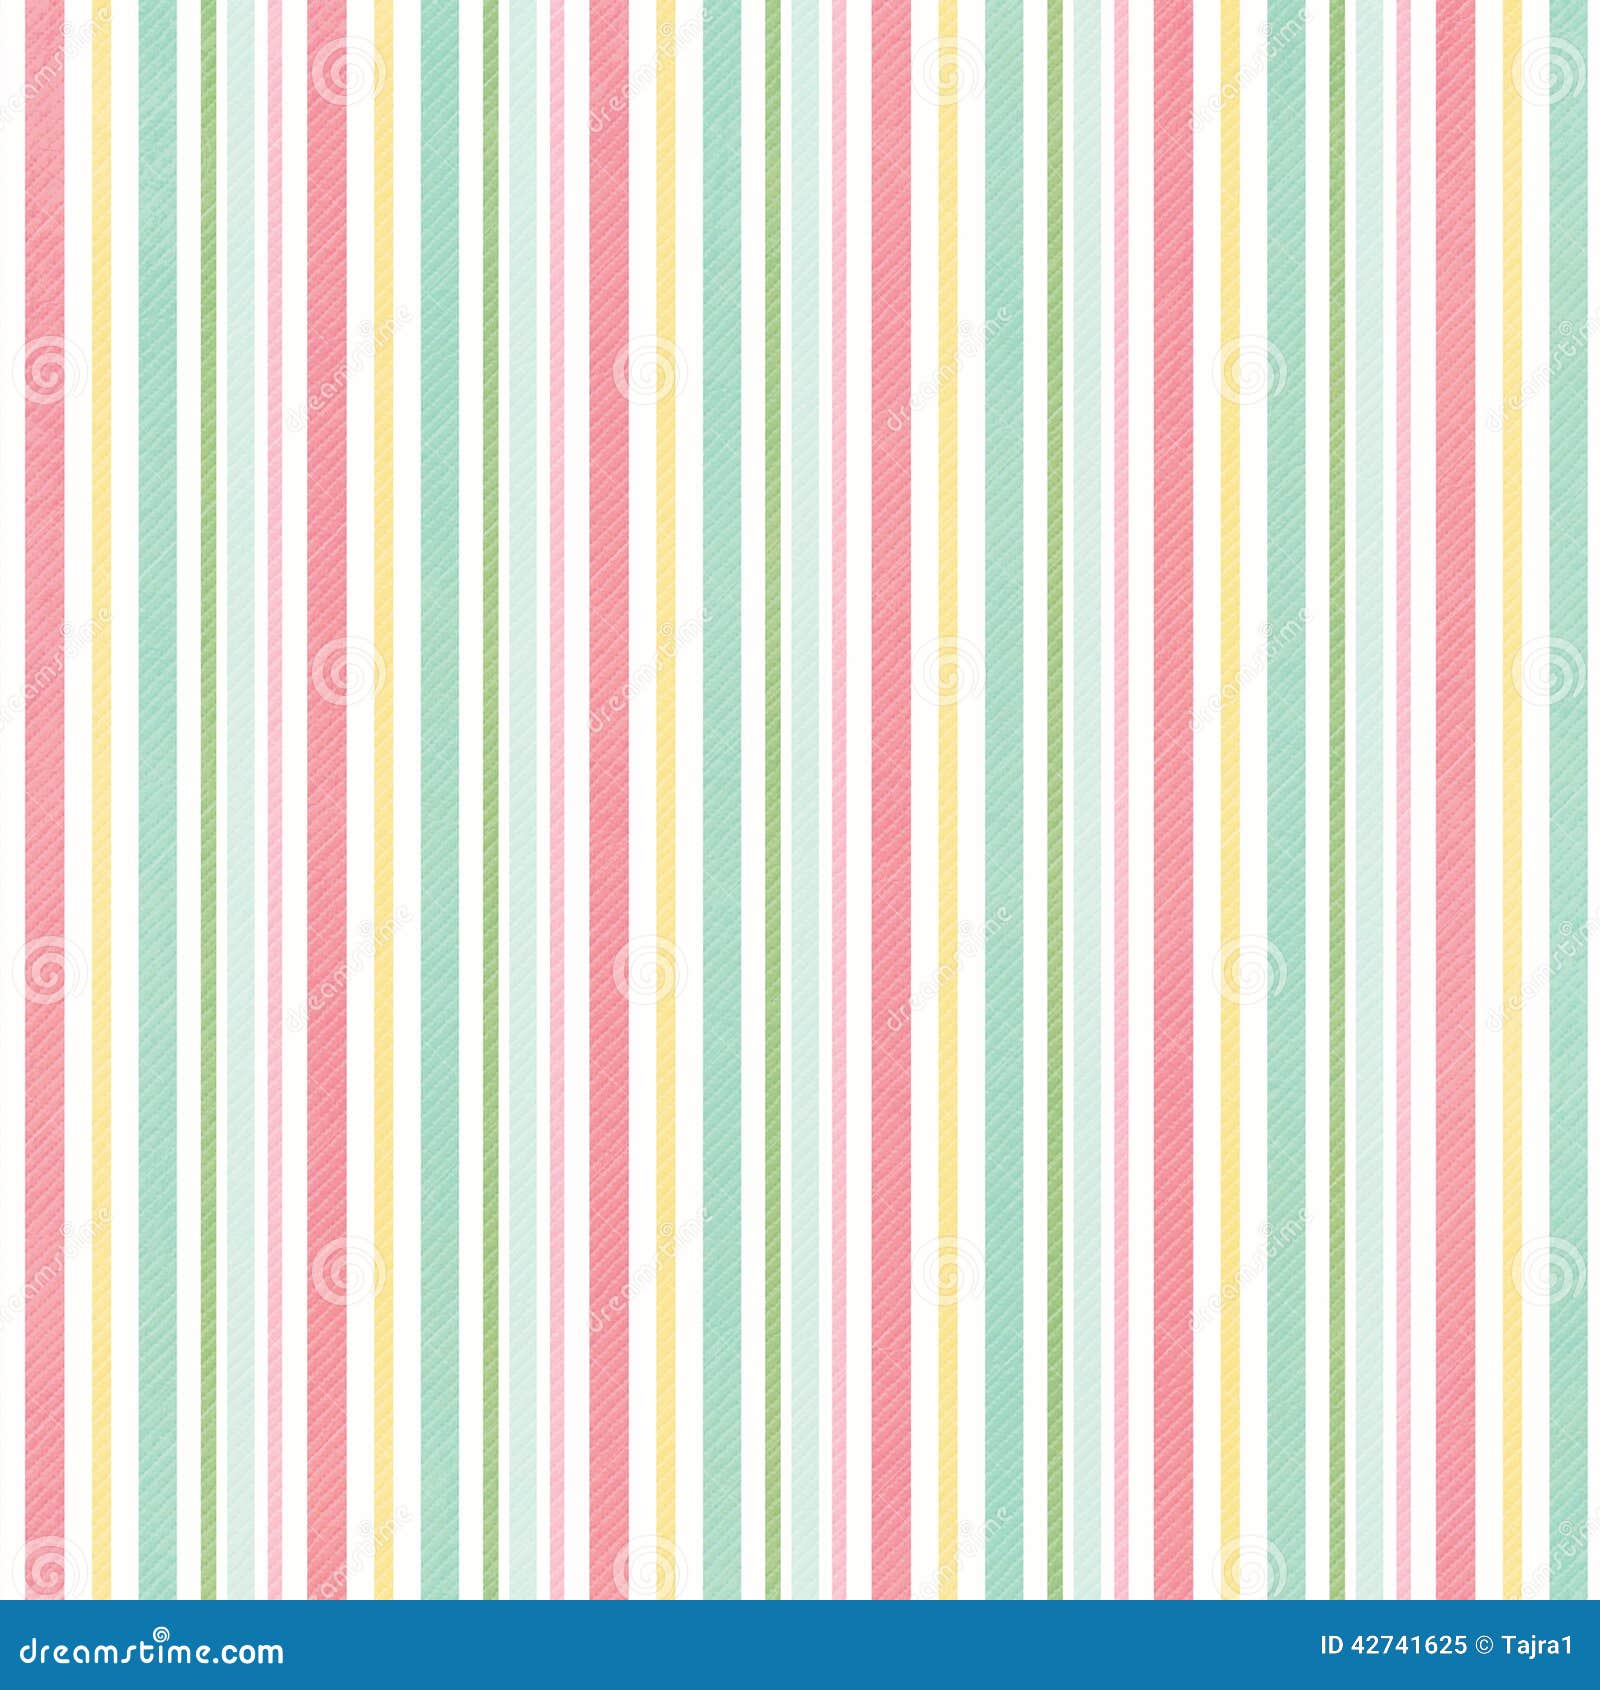 retro stripe pattern